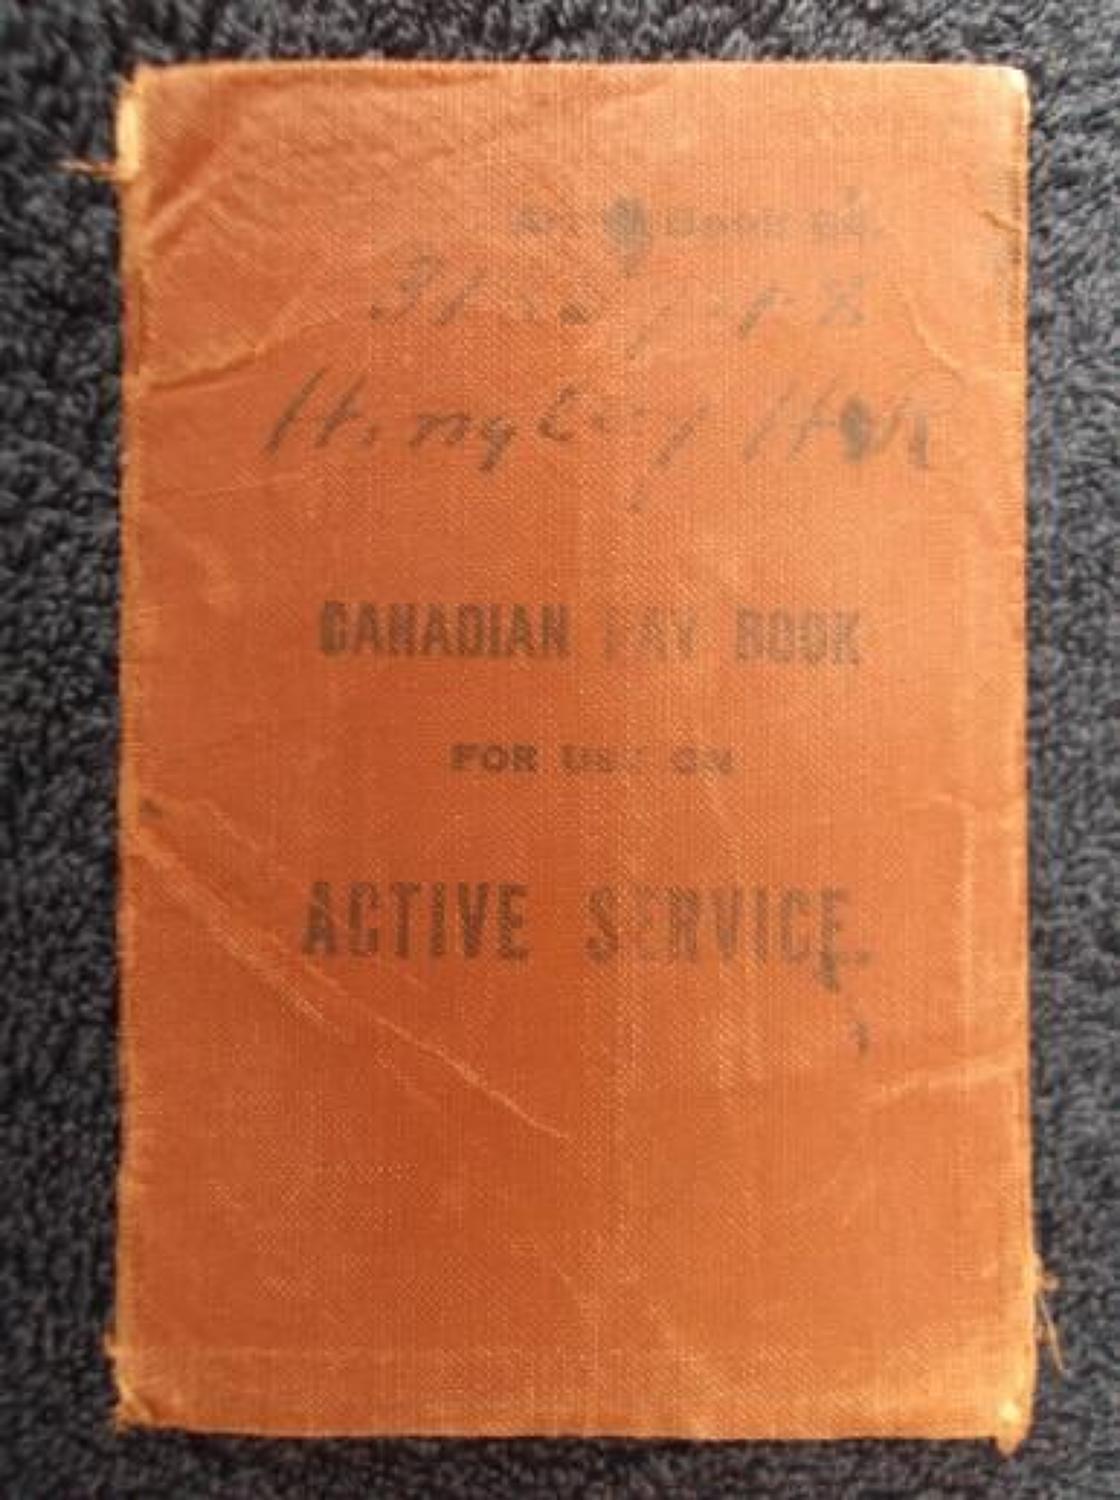 WW1 Canadian Army Pay book: Harry Hingley.